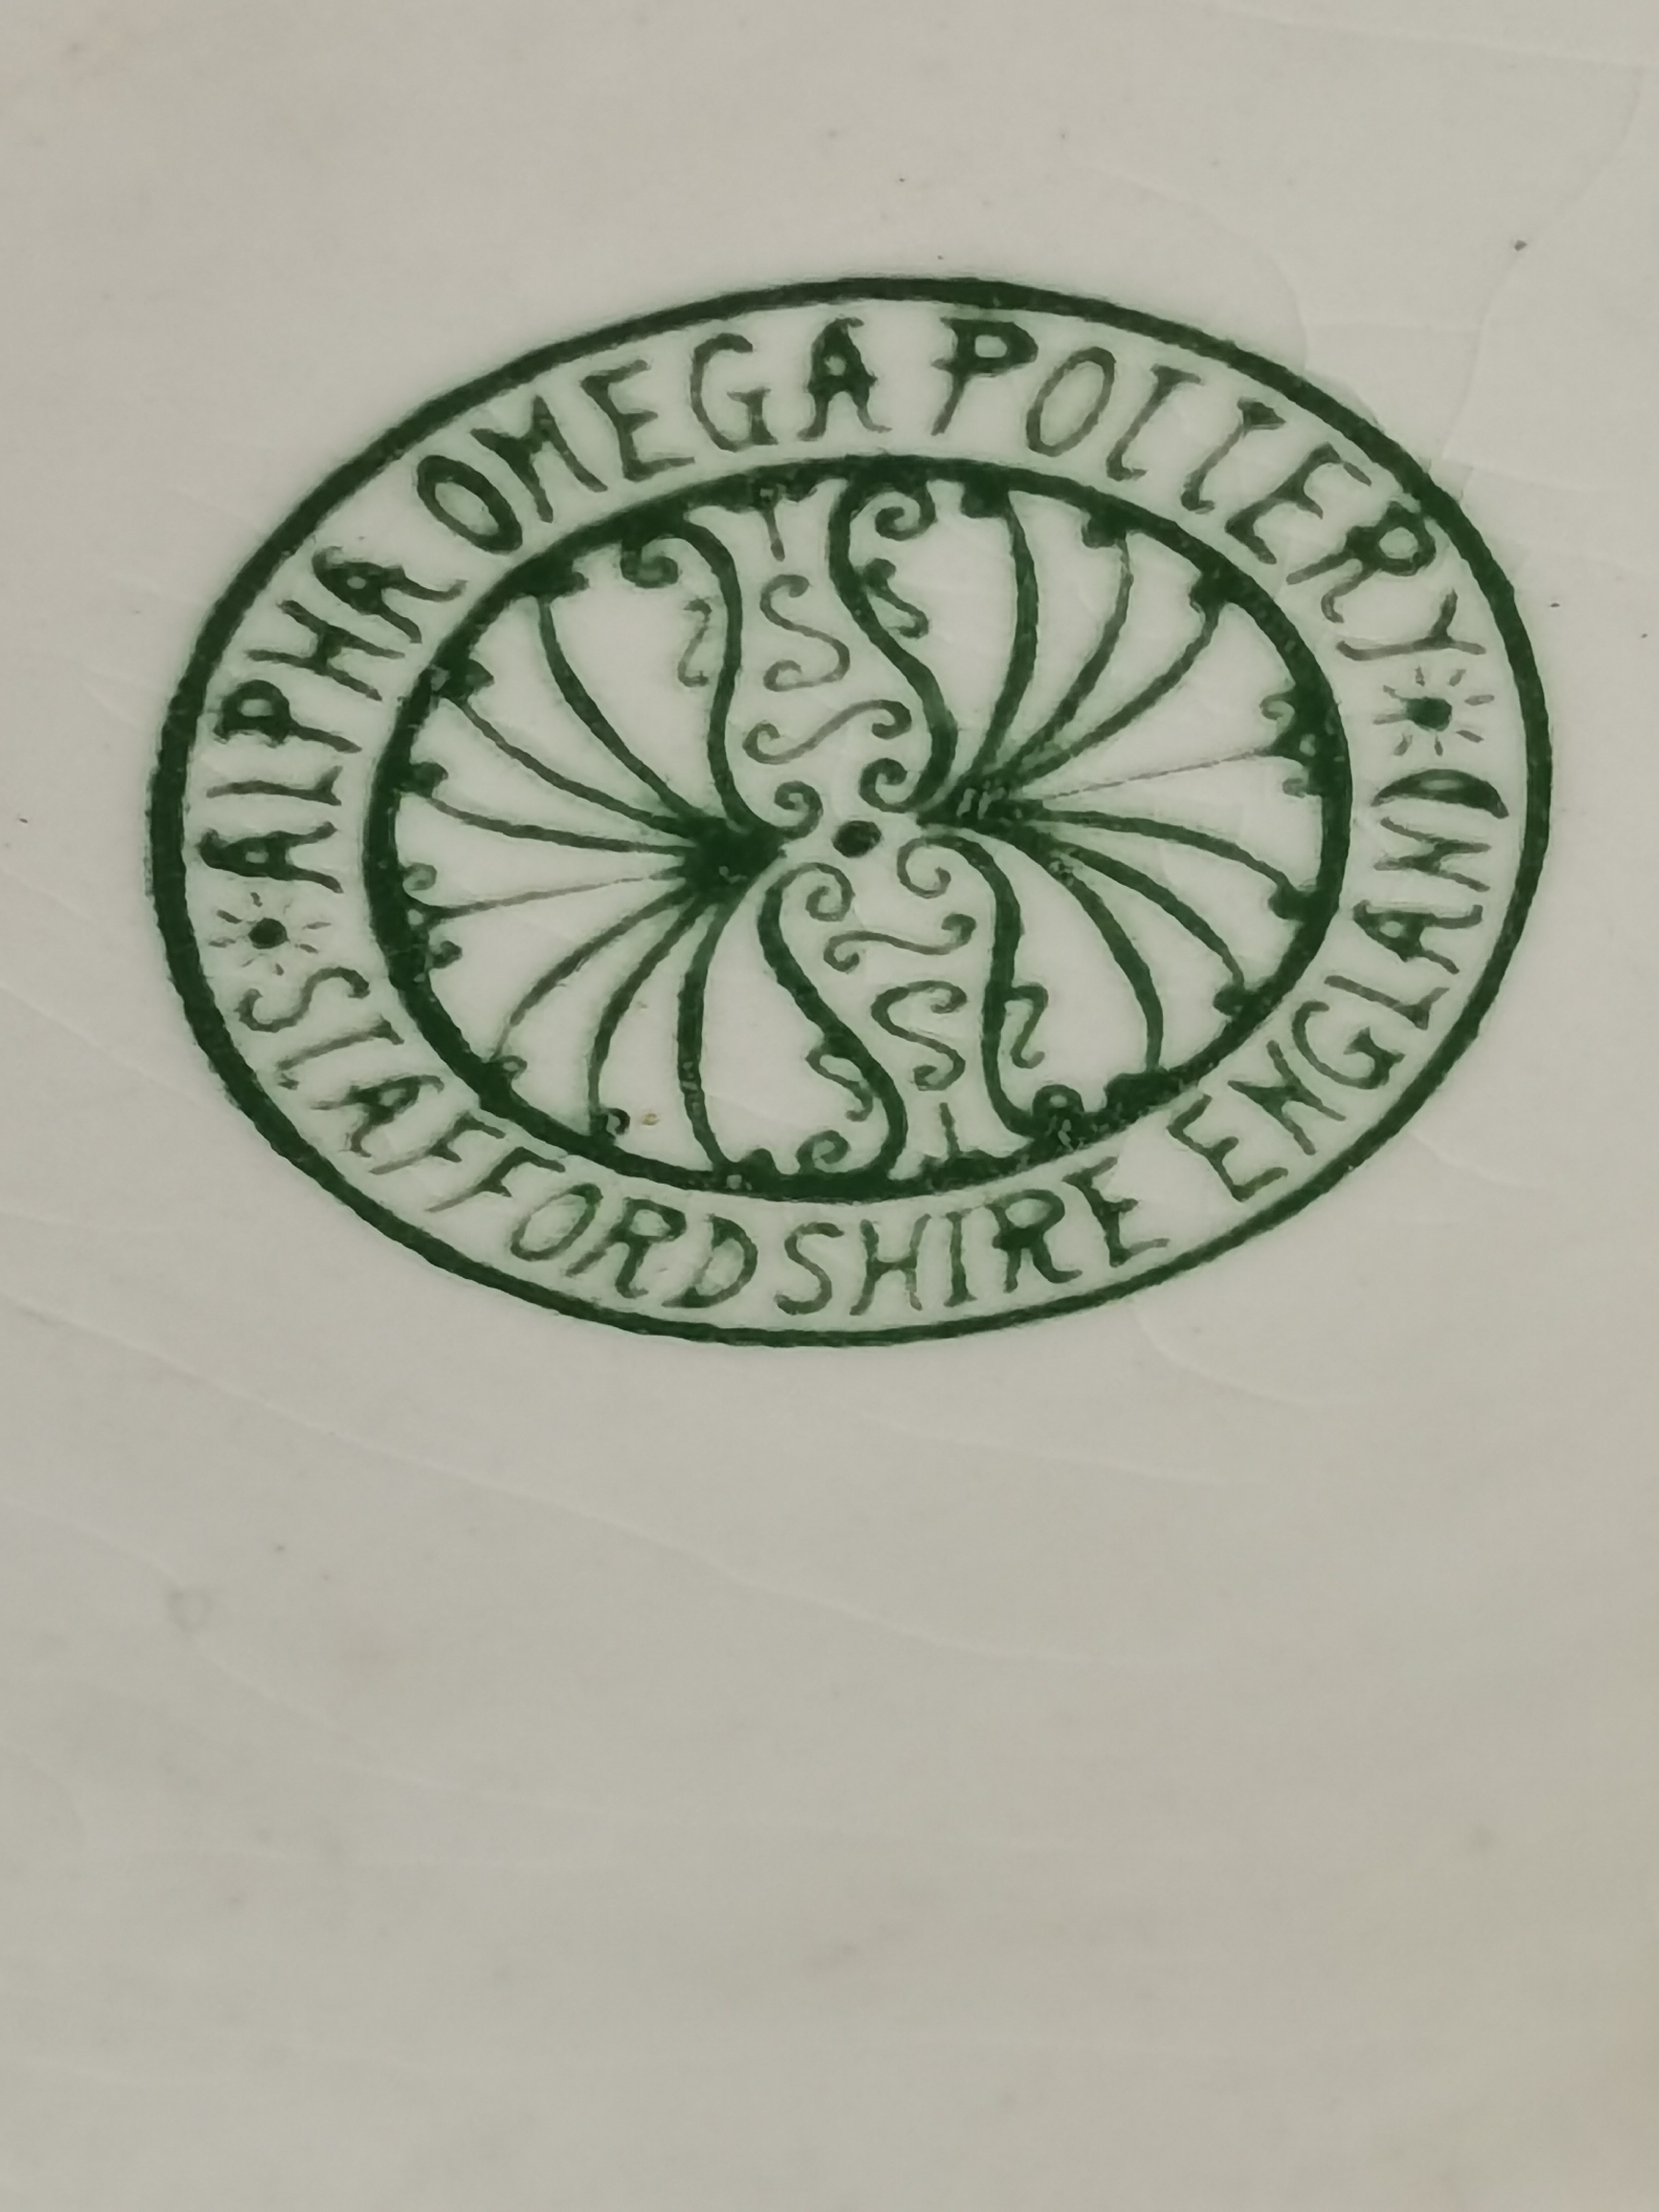 3 x Royal Staffordshire vintage jugs marked "Alpha Omega pottery" - Image 6 of 6